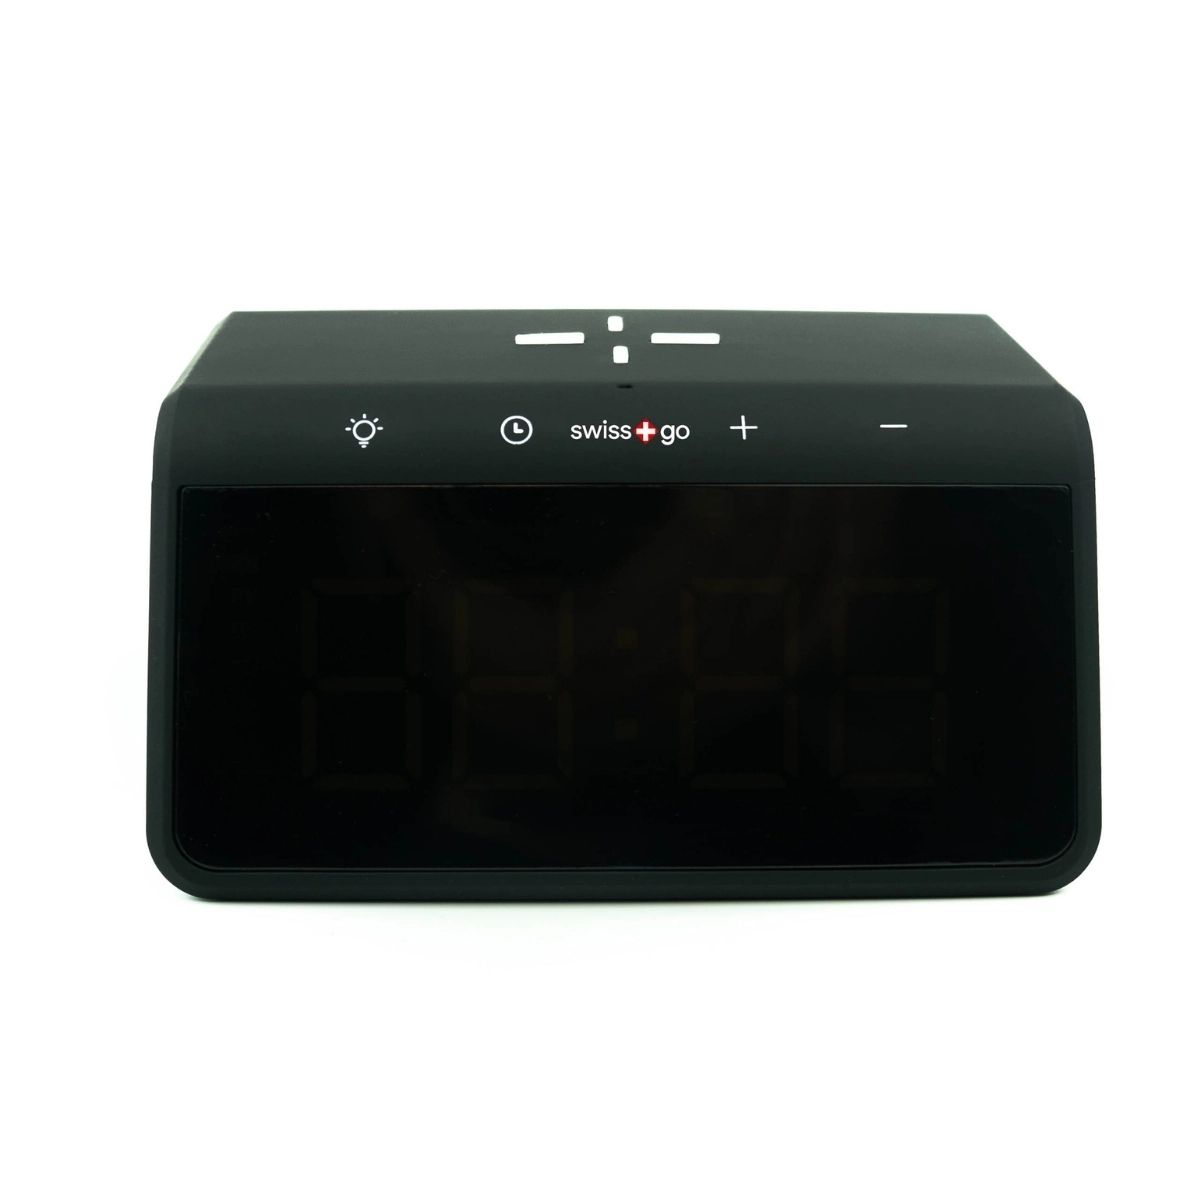 SWI503020 - Reloj Despertador SWISS GO Enea con cargador inalmbrico - iluminacin nocturna LED 8 colores - Puerto USB (SWI503020)